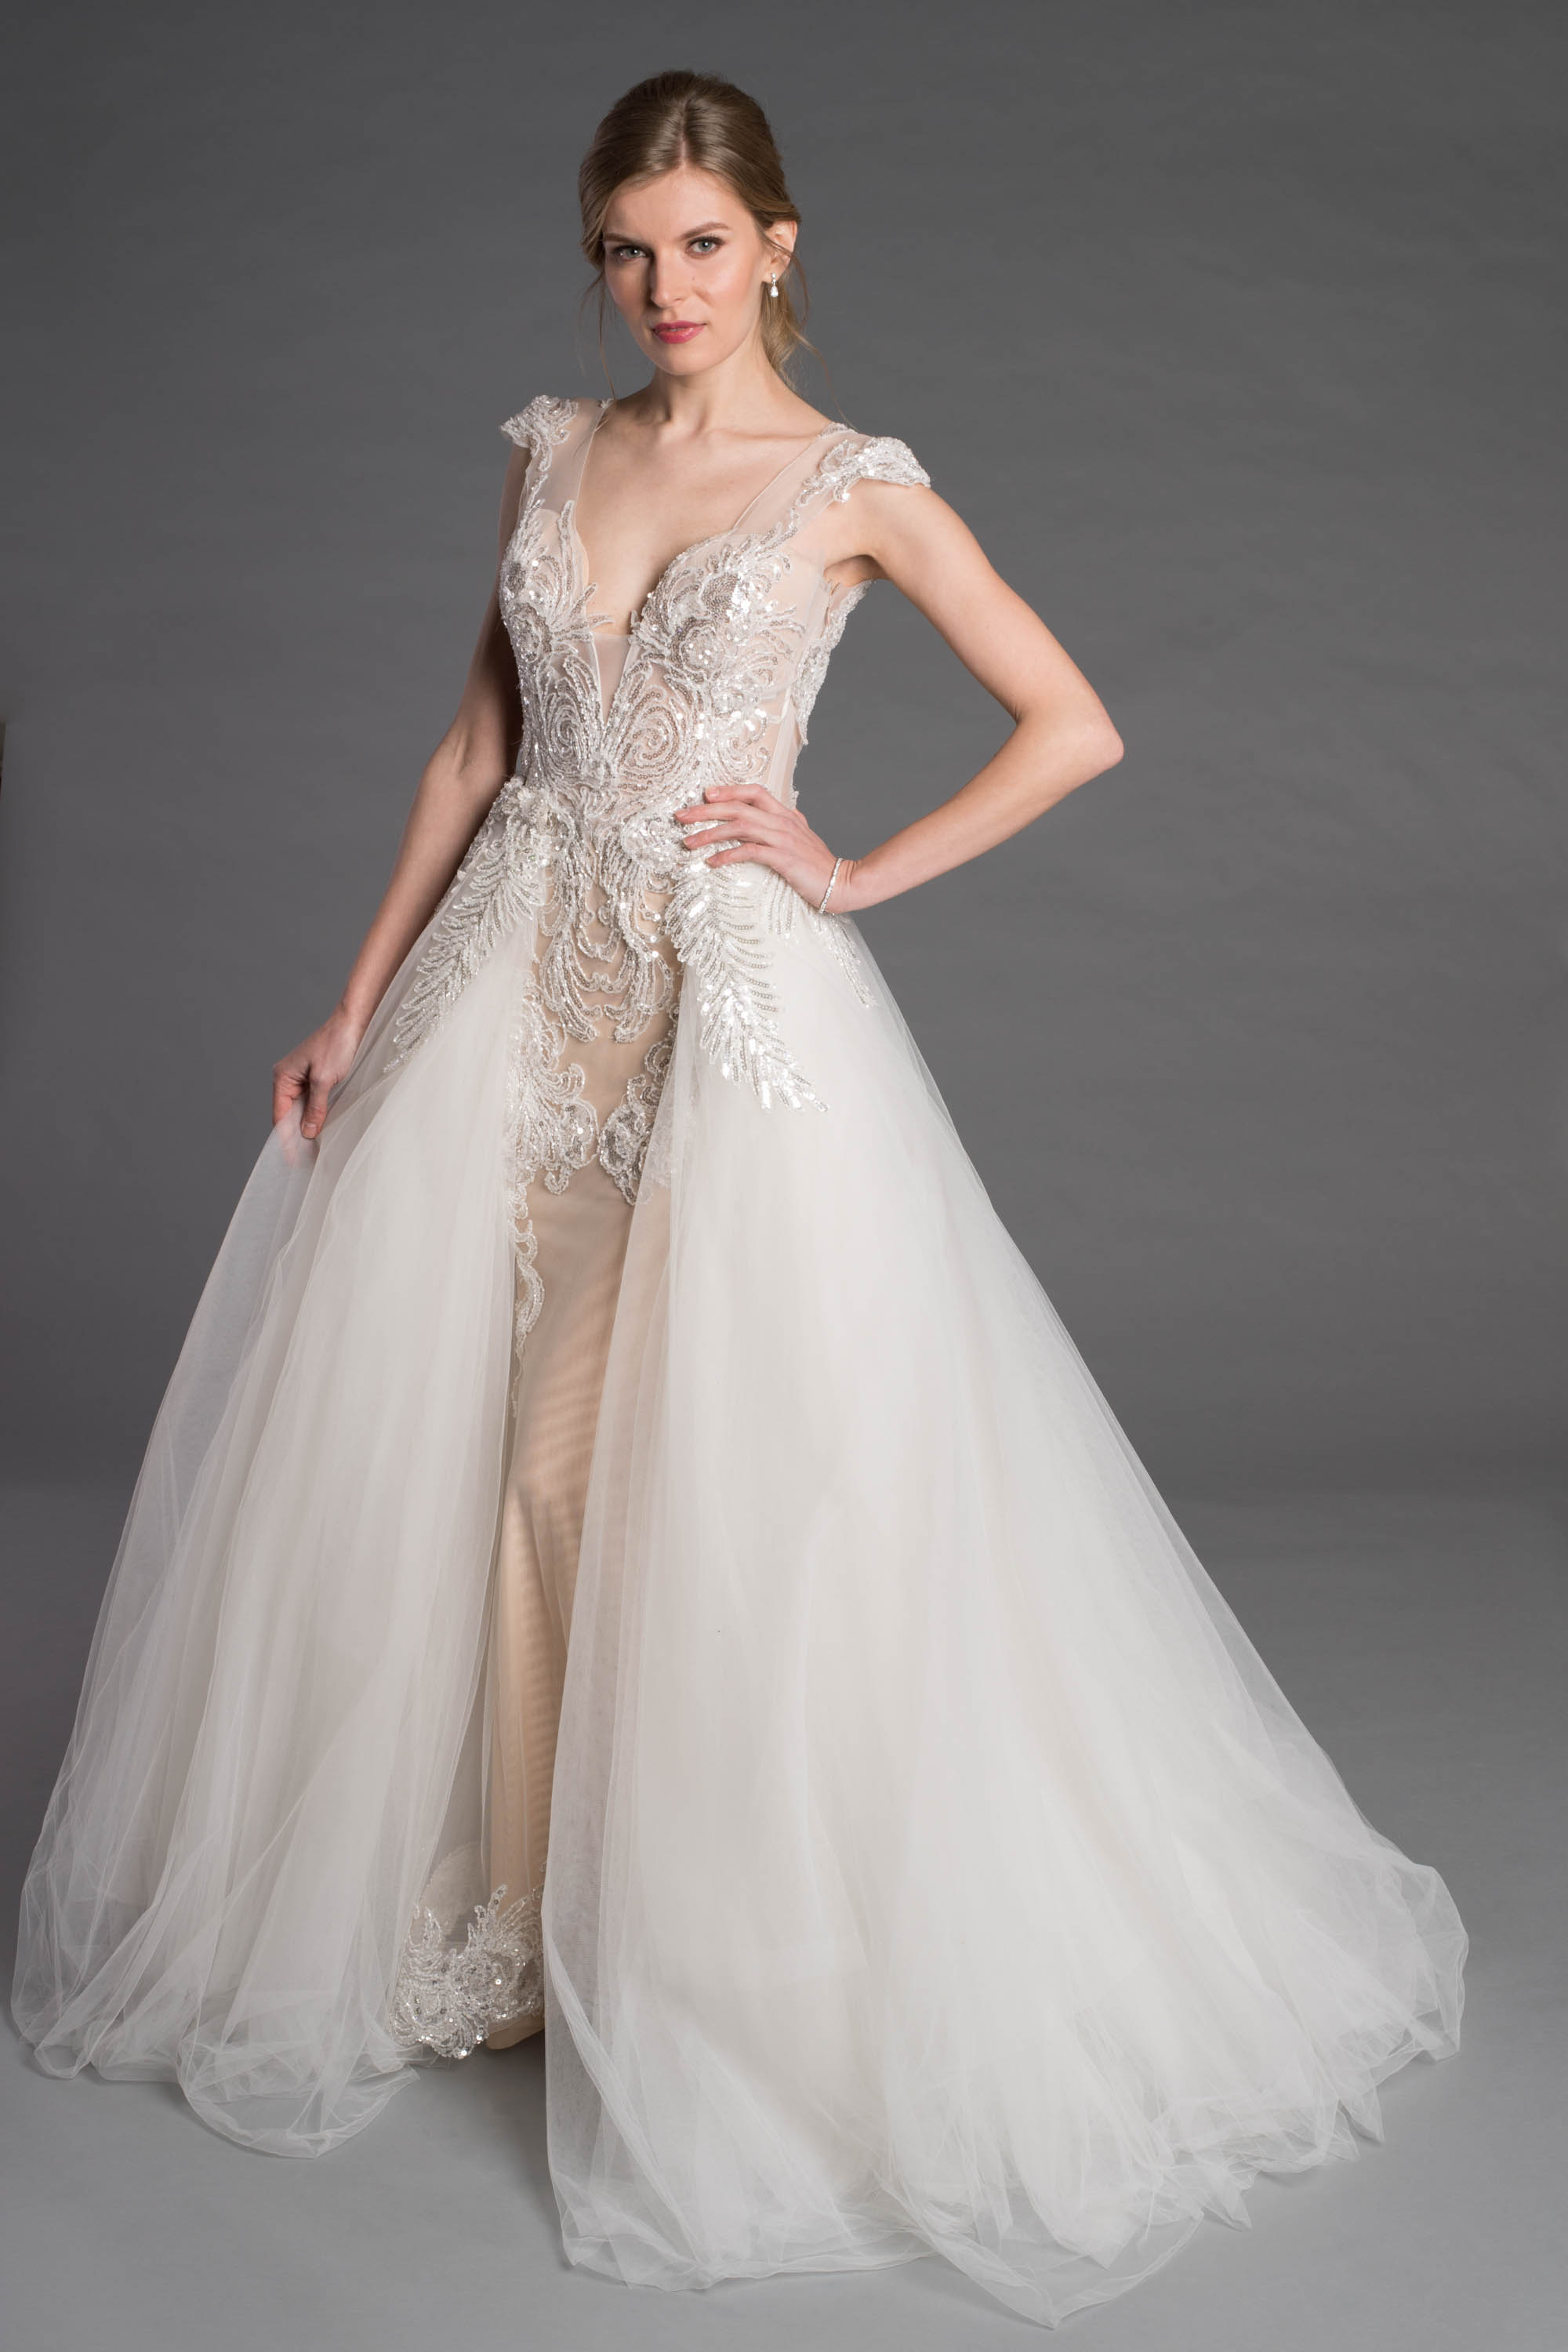 pnina tornai wedding dresses tulle ball gown over-skirt | kleinfeld bridal wmbtuzc